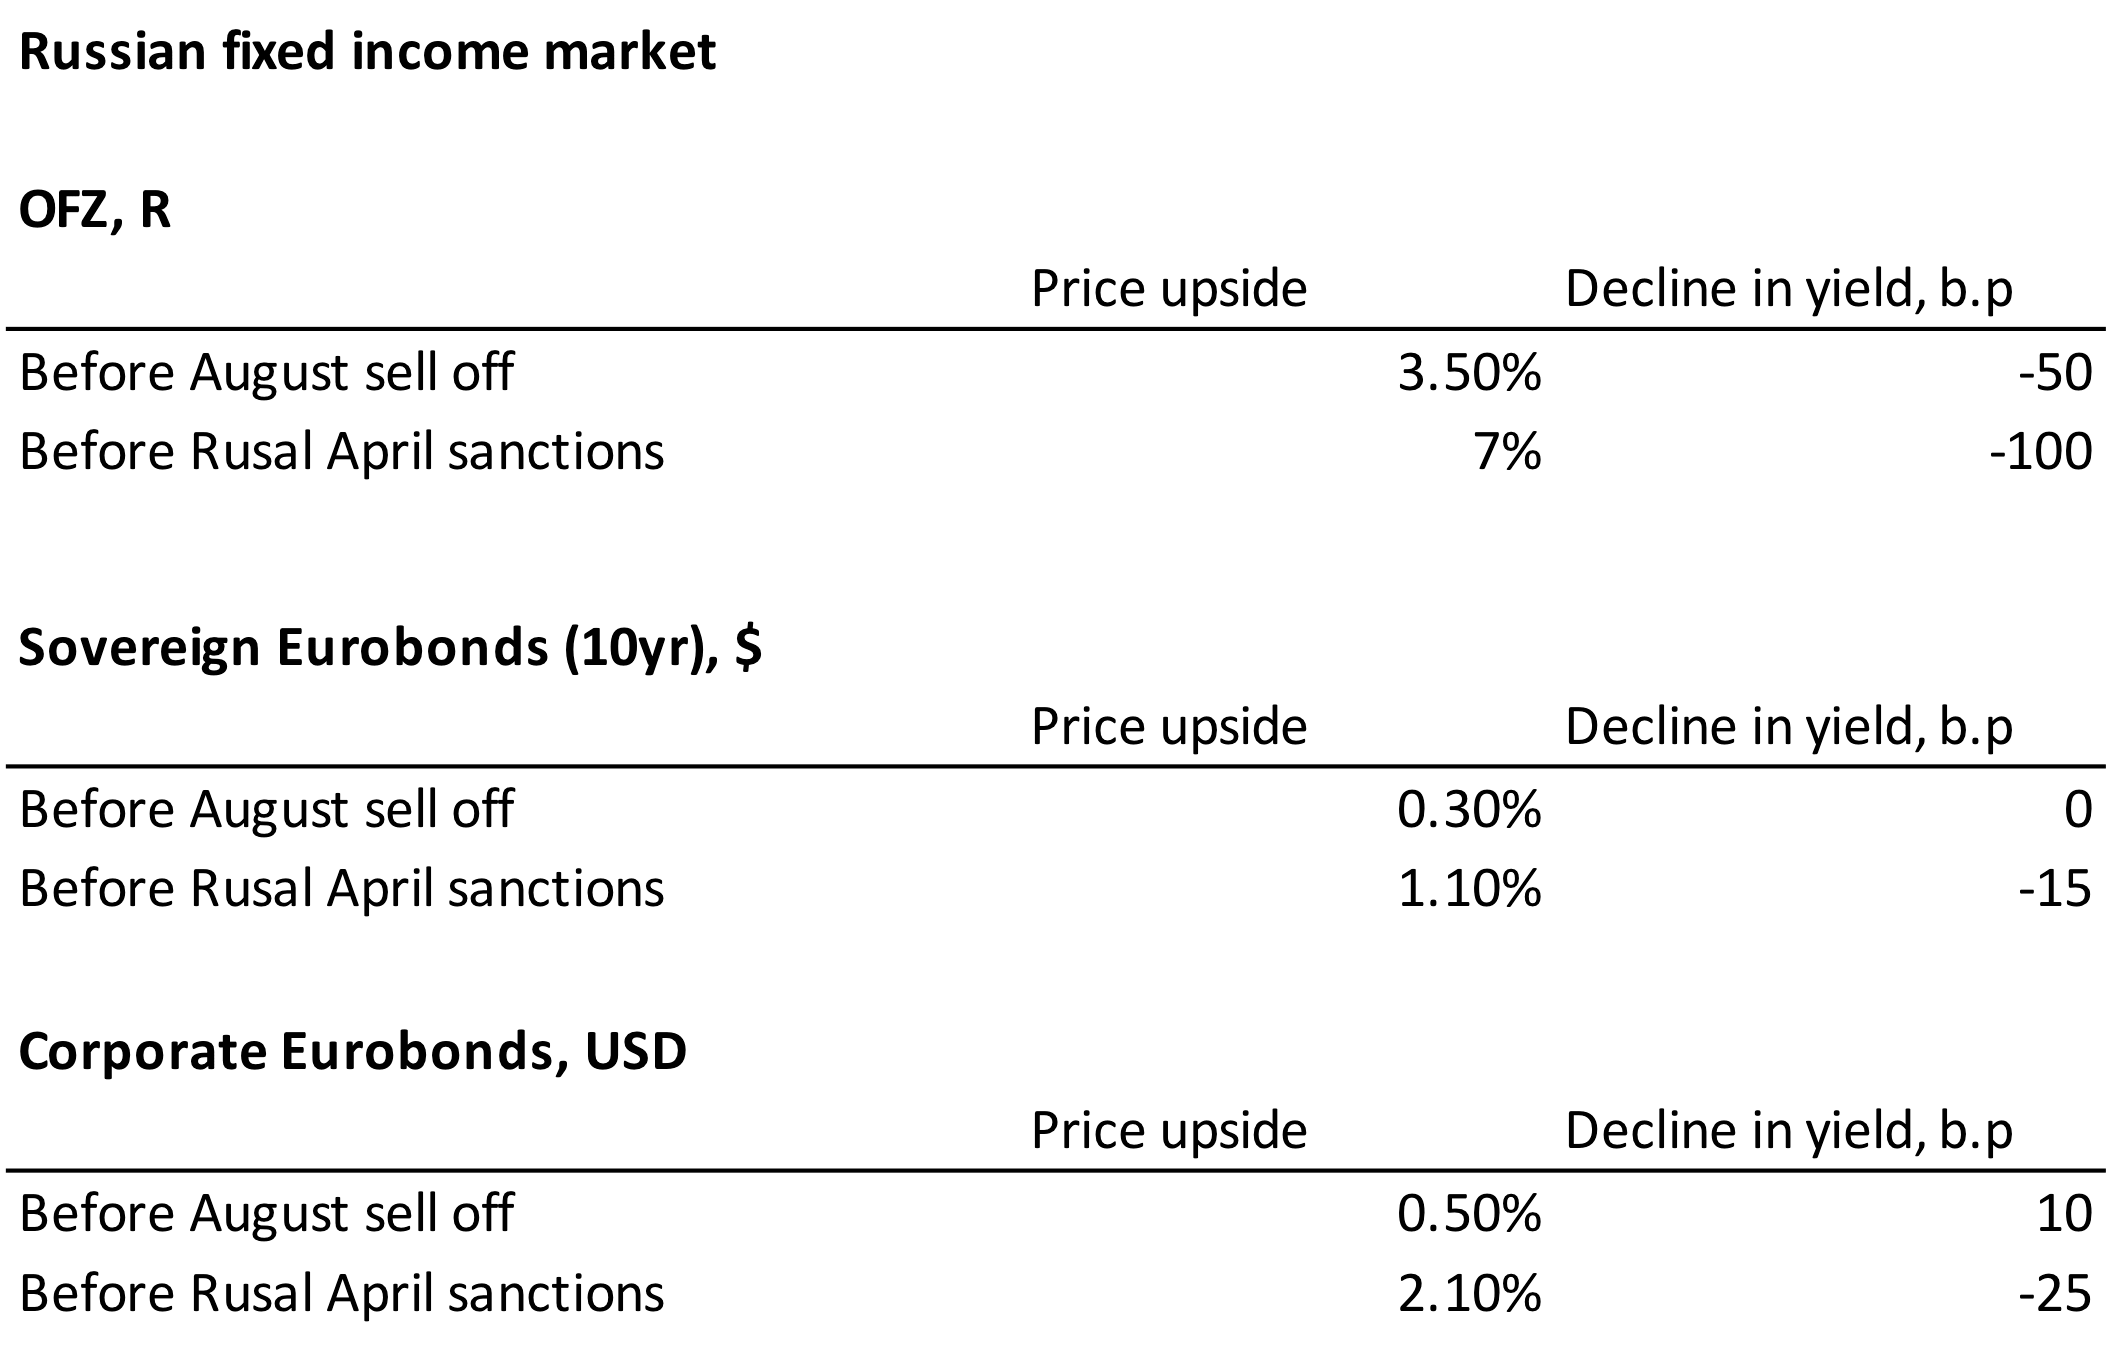 Russian fixed income market